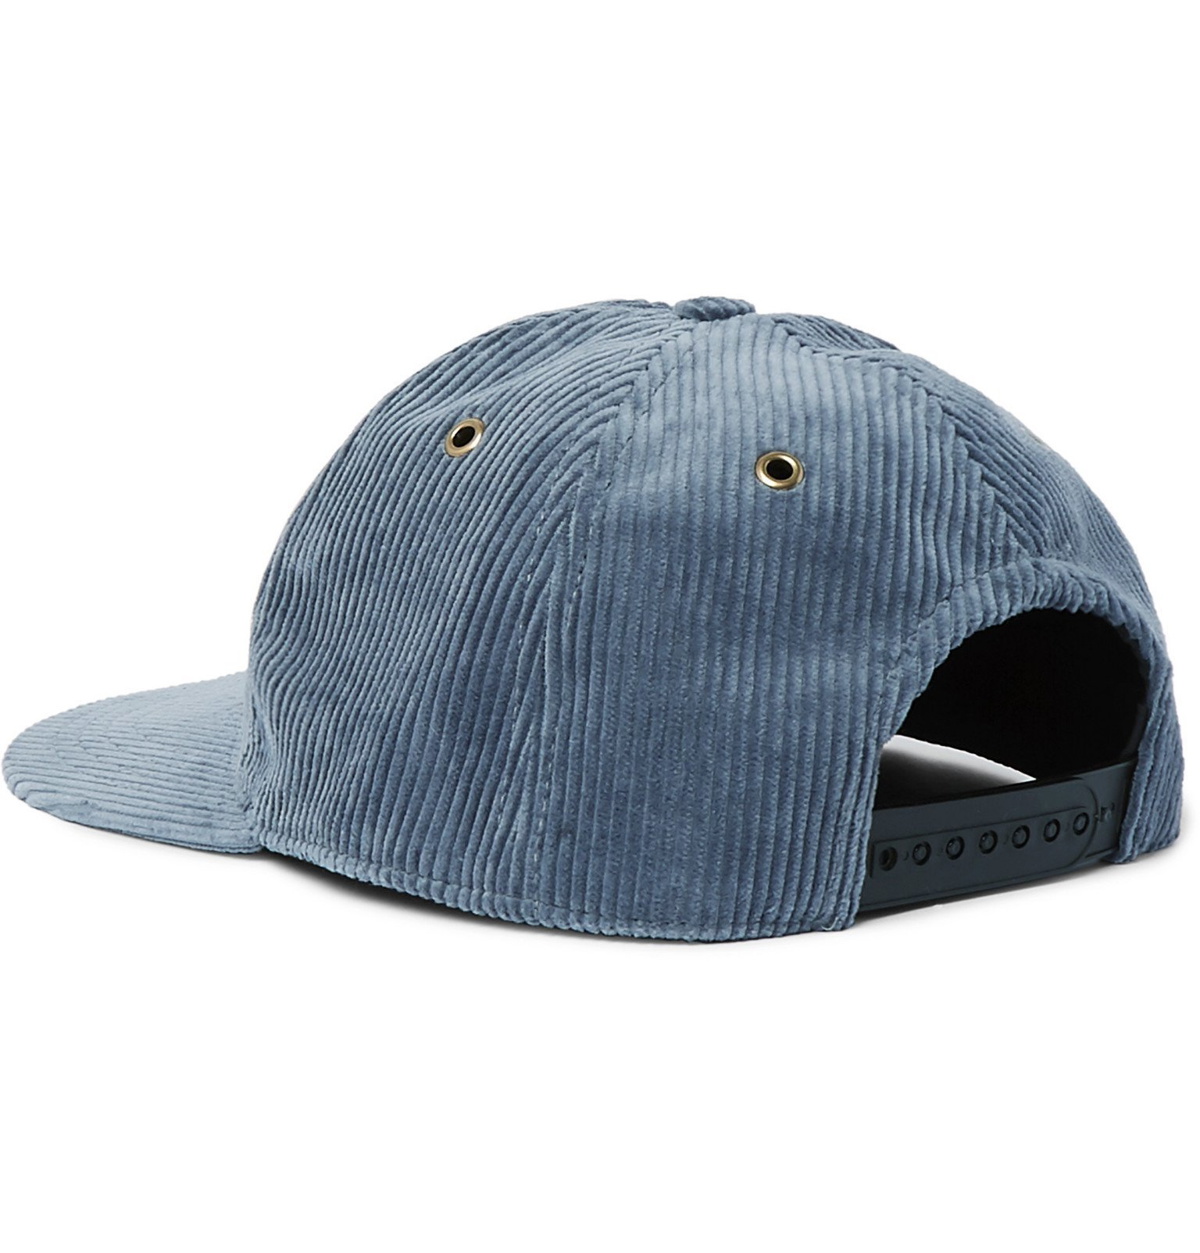 WOODLAND Men Baseball Cap with Brand Applique For Men (Blue, OS)